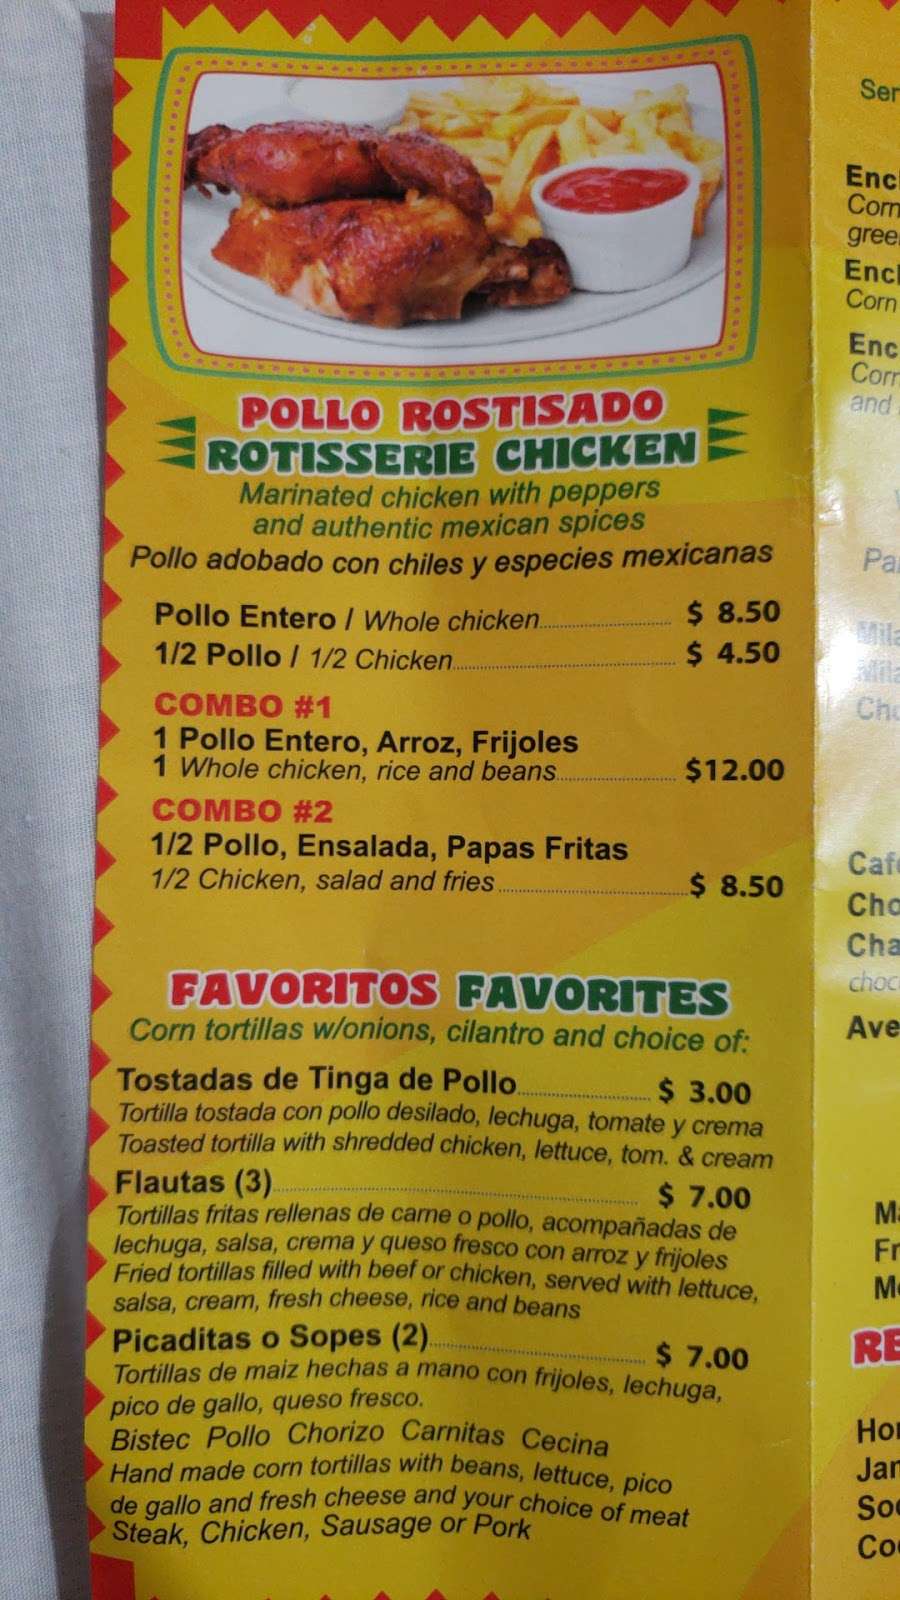 Casa Ofelias Mexican Restaurant | 1293a Grand Ave, Baldwin, NY 11510, USA | Phone: (516) 705-4311